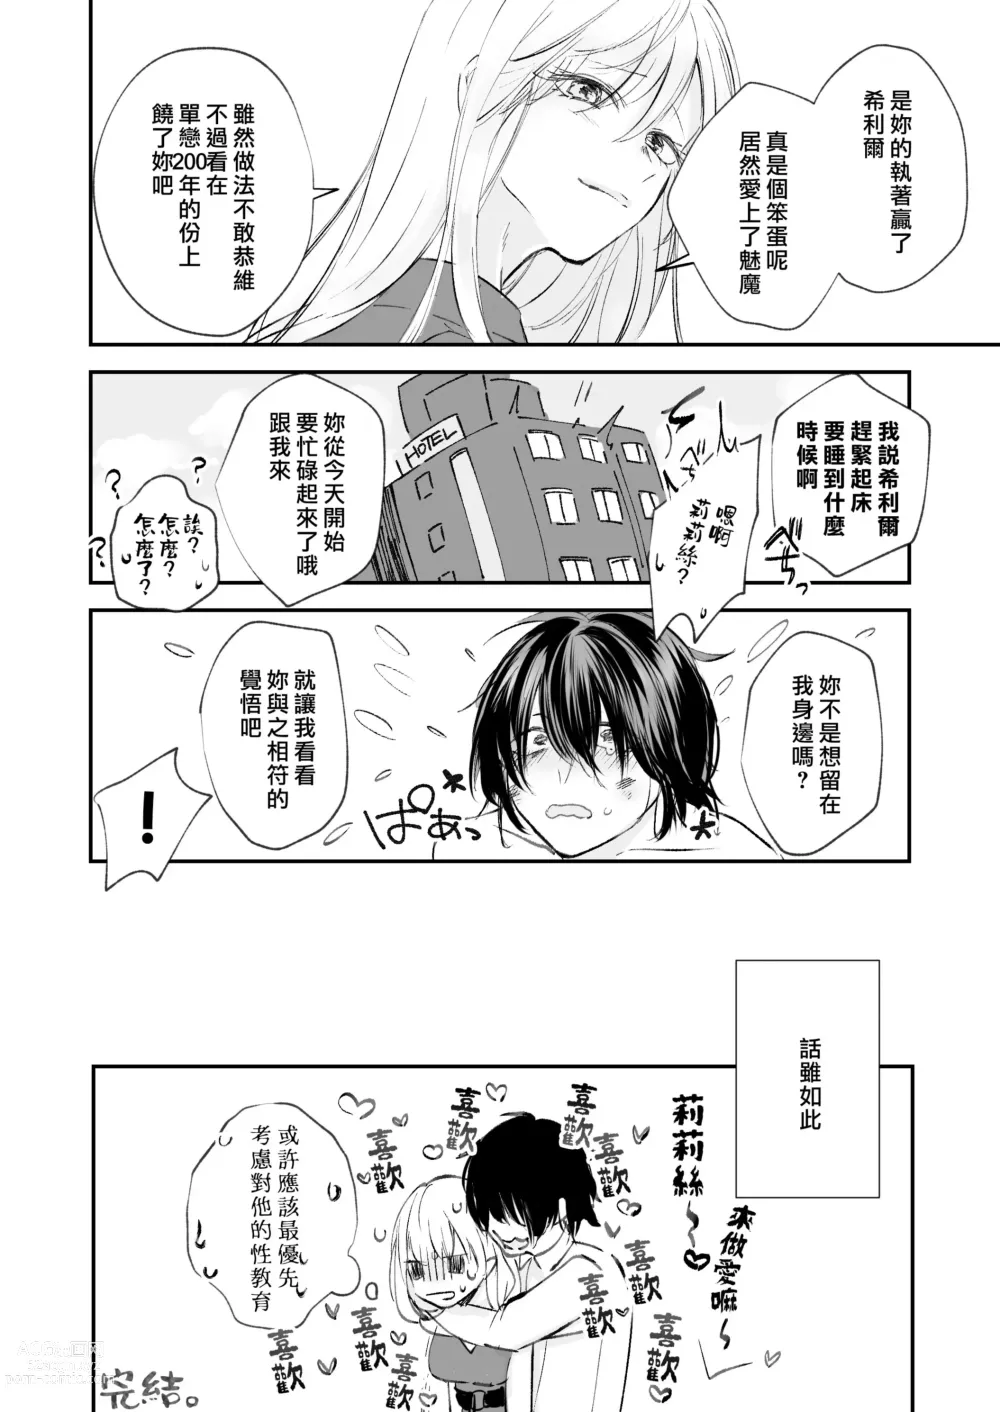 Page 43 of doujinshi 病娇天使迷恋着好心魅魔